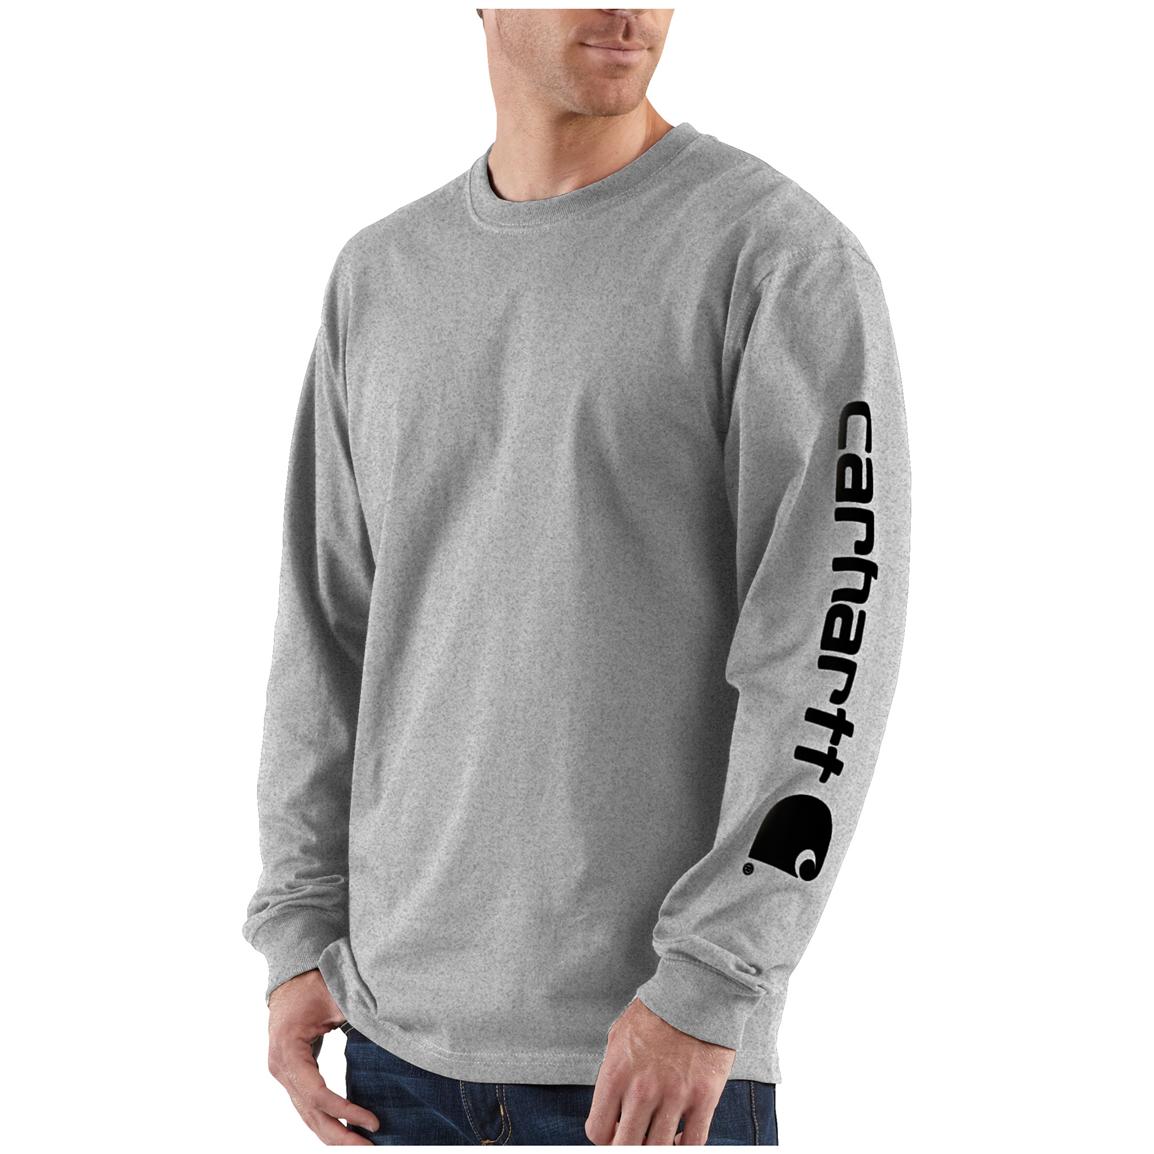 Carhartt® Long Sleeve T - Shirt - 169969, T-Shirts at Sportsman's Guide